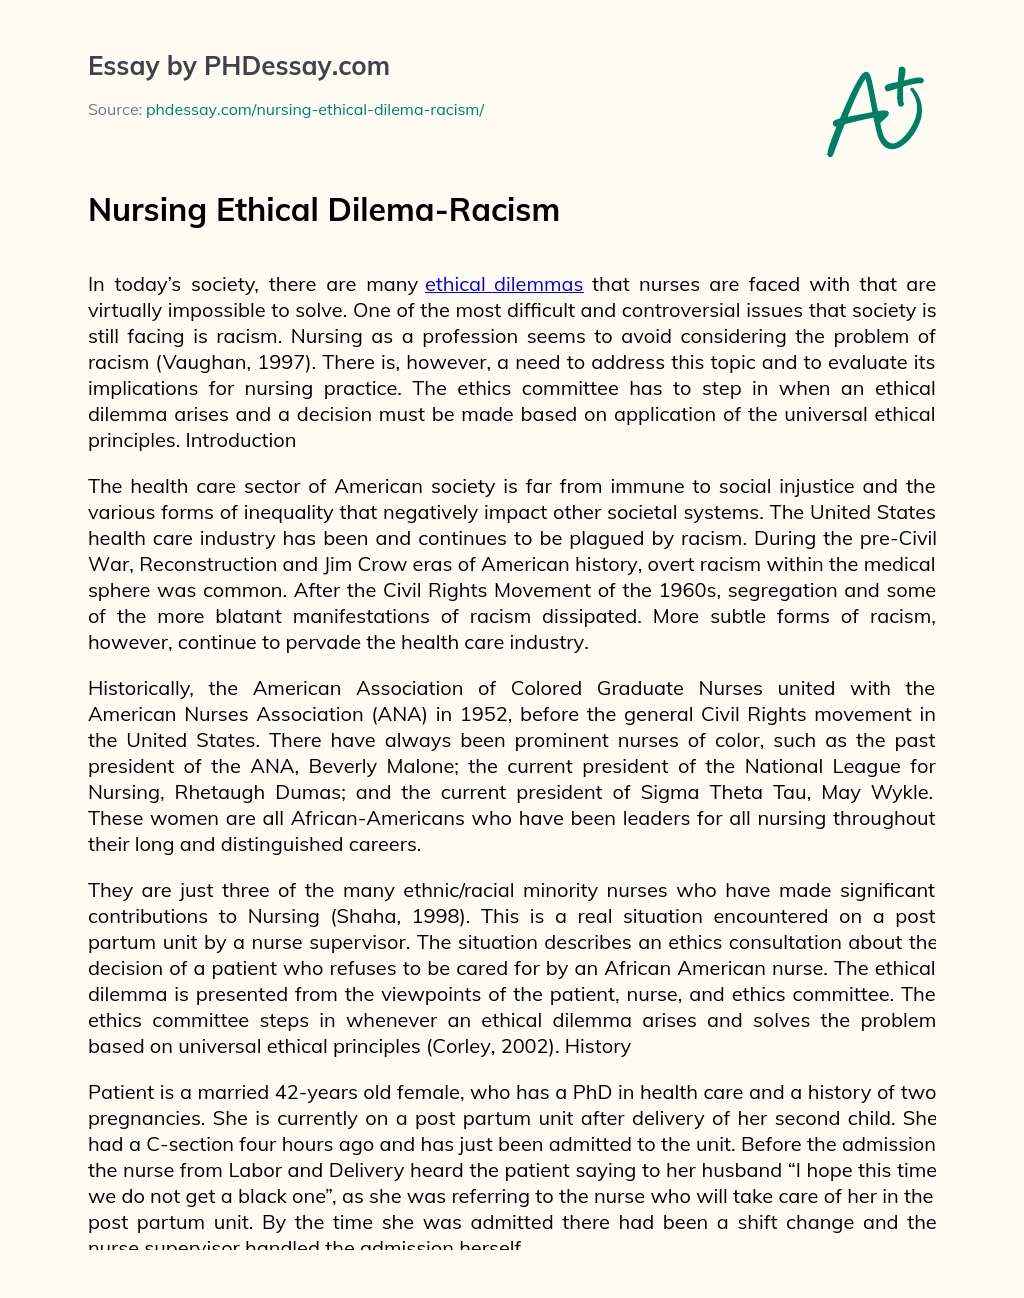 Nursing Ethical Dilema-Racism essay